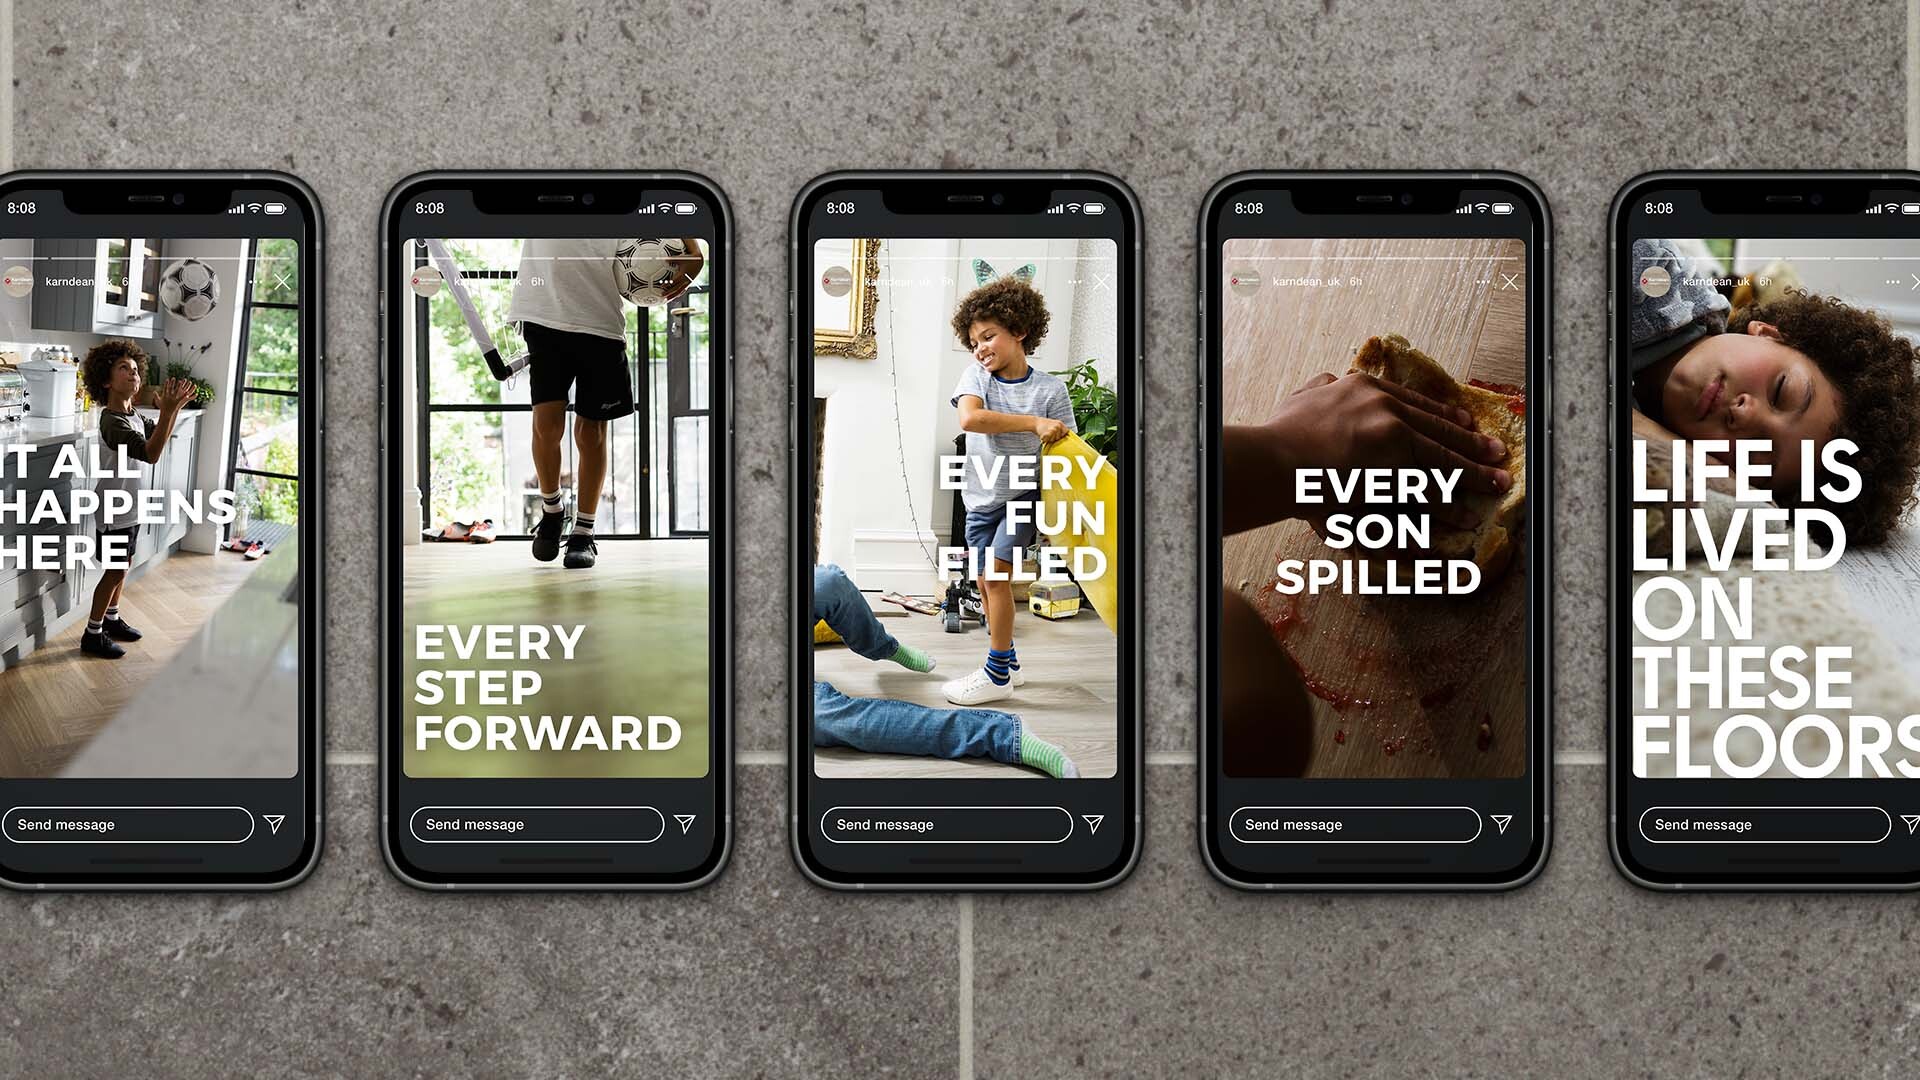 Karndean's brand campaign digital ads